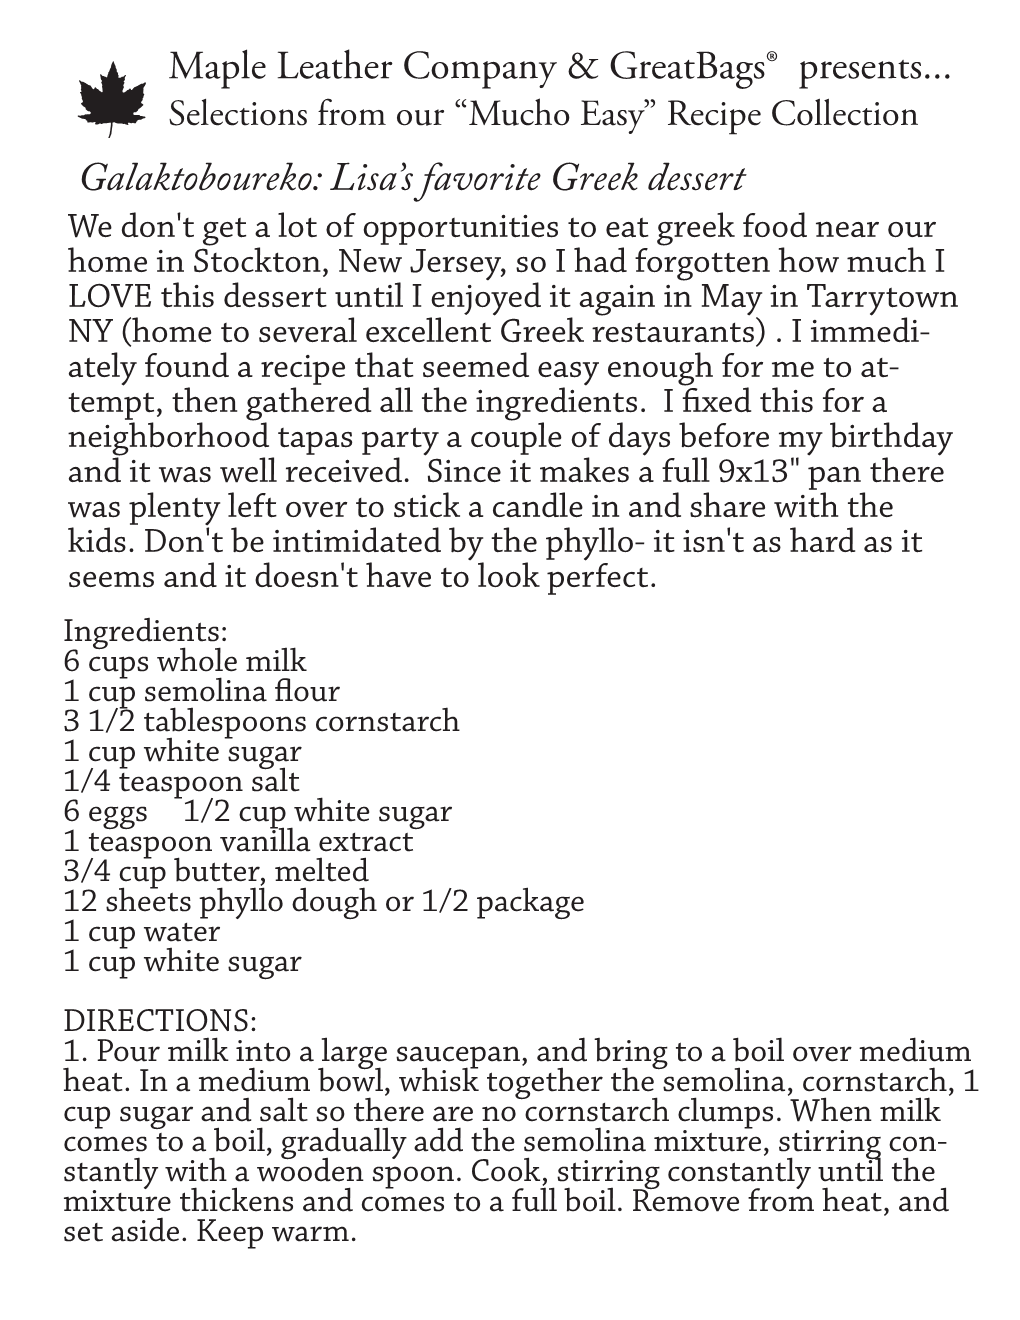 Galaktoboureko: Lisa's Favorite Greek Dessert Maple Leather Company